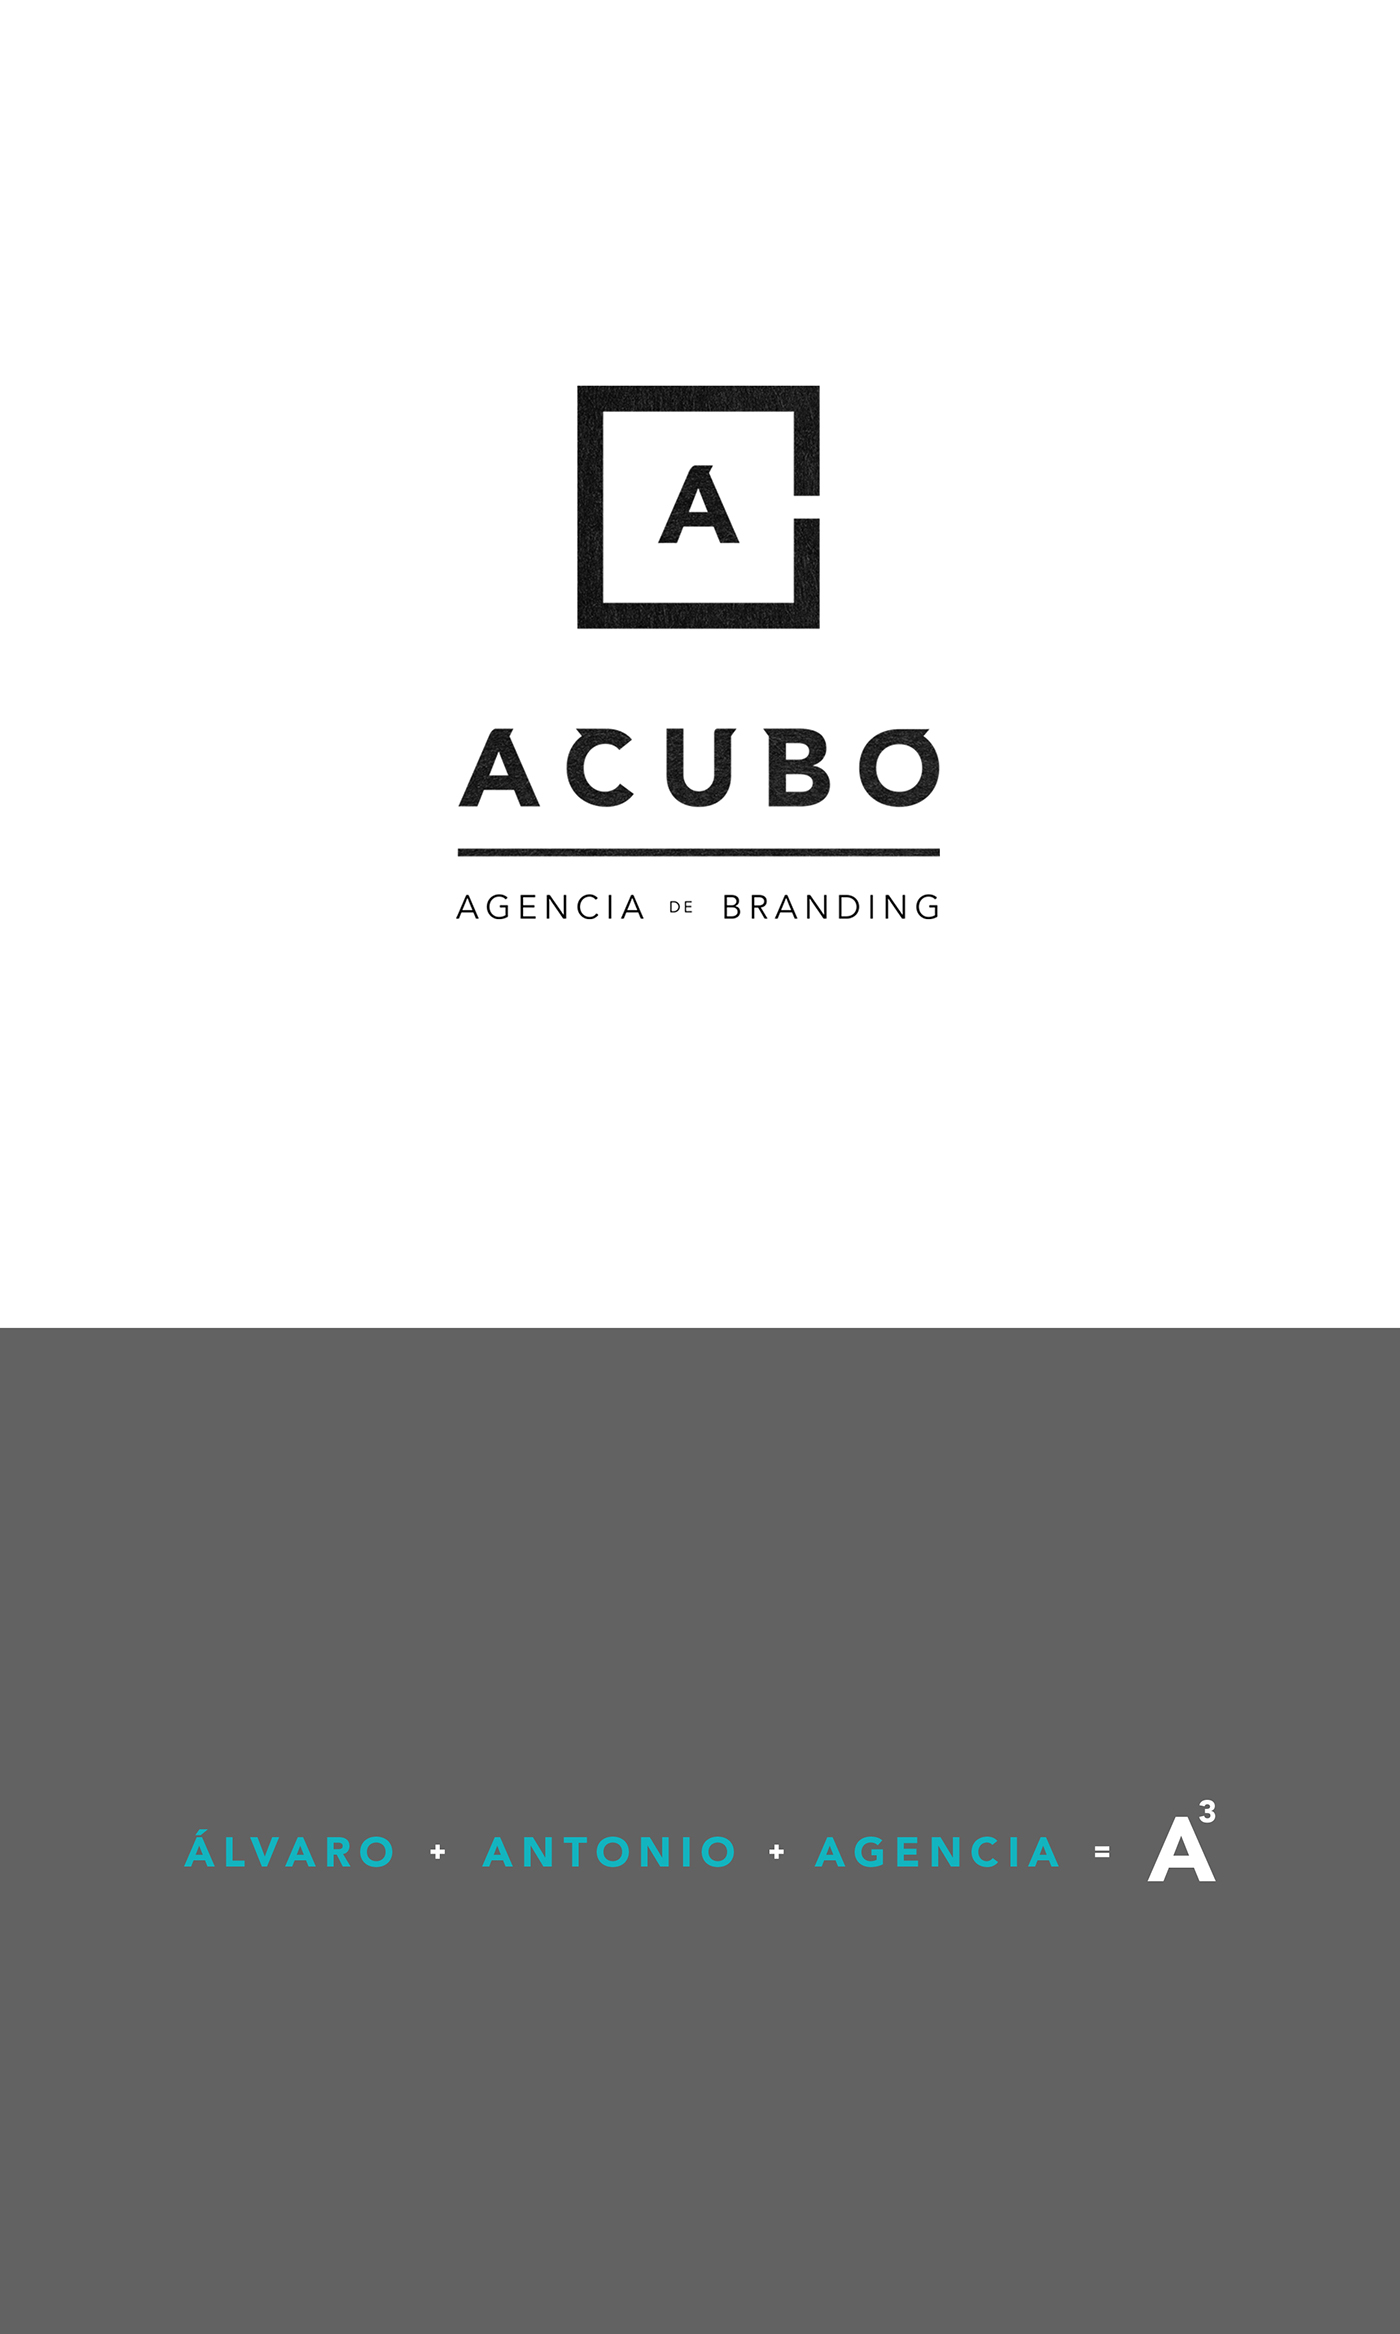 acubo studio agency agencia creativa branding 